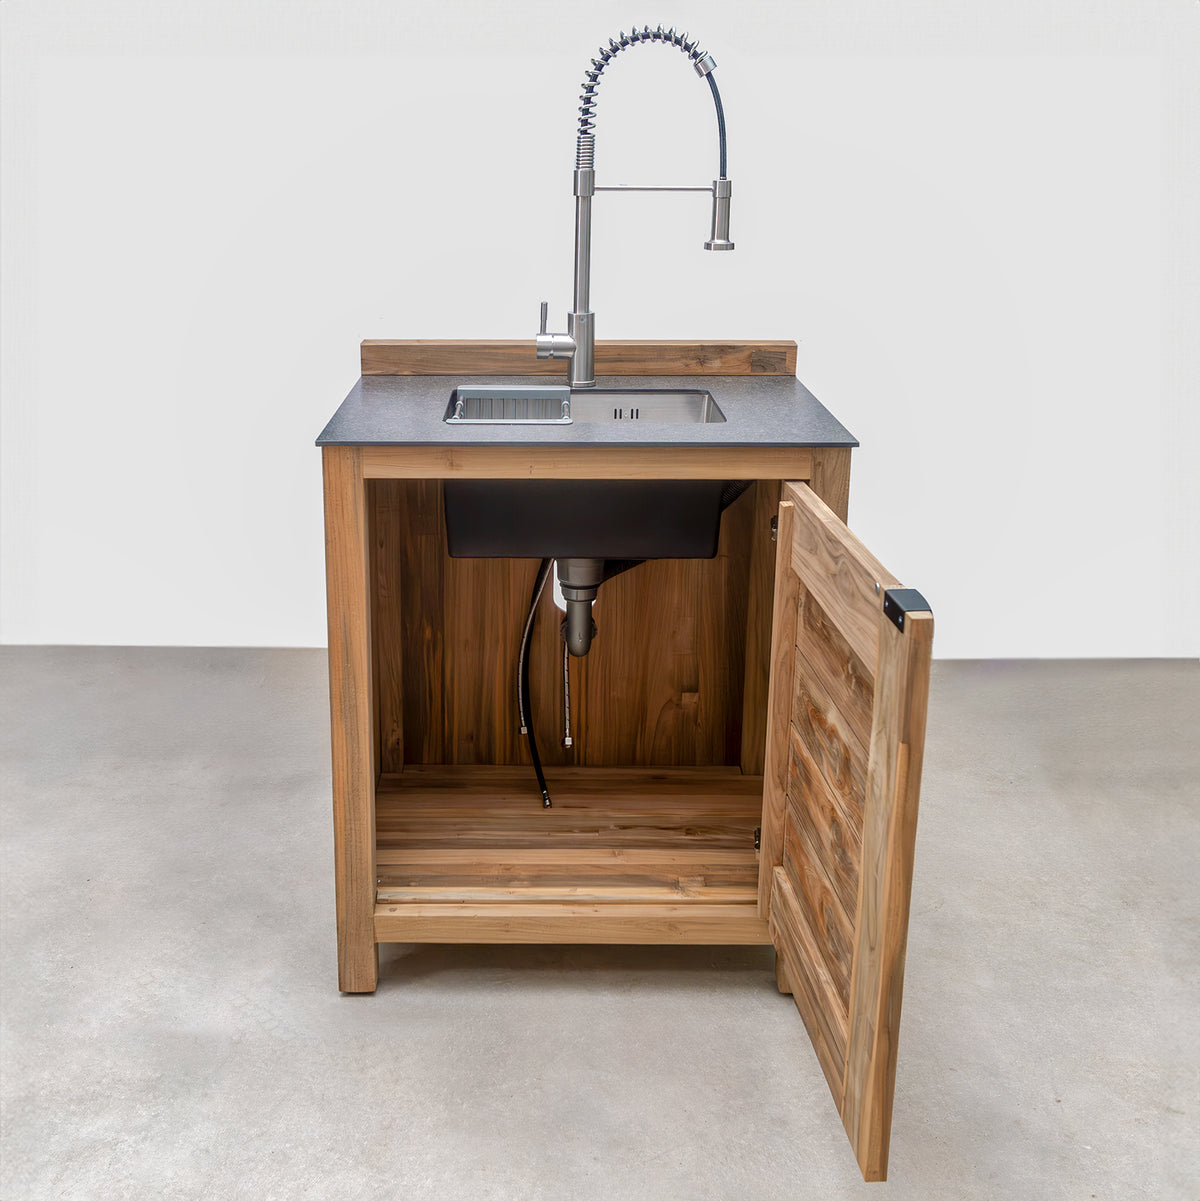 Draco Grills Teak 6 Burner Outdoor Kitchen with Modular Single Fridge, Single Cupboard, Corner Cabinet, Sink